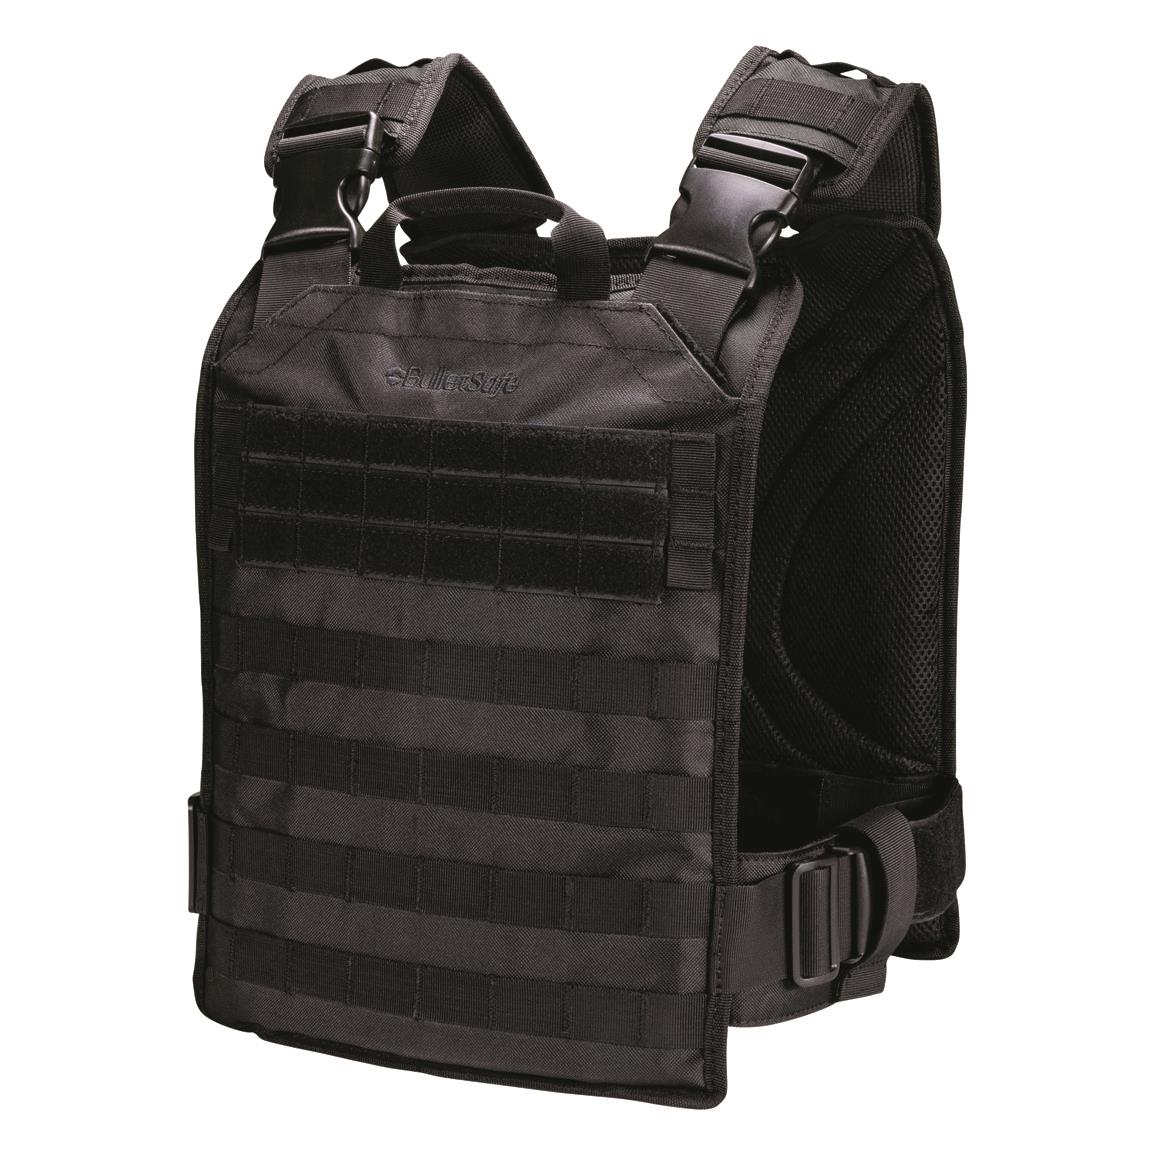 Premier Discreet Executive Level IIIA Bulletproof Vest - 720494, Armor  Plate & Carrier Sets at Sportsman's Guide